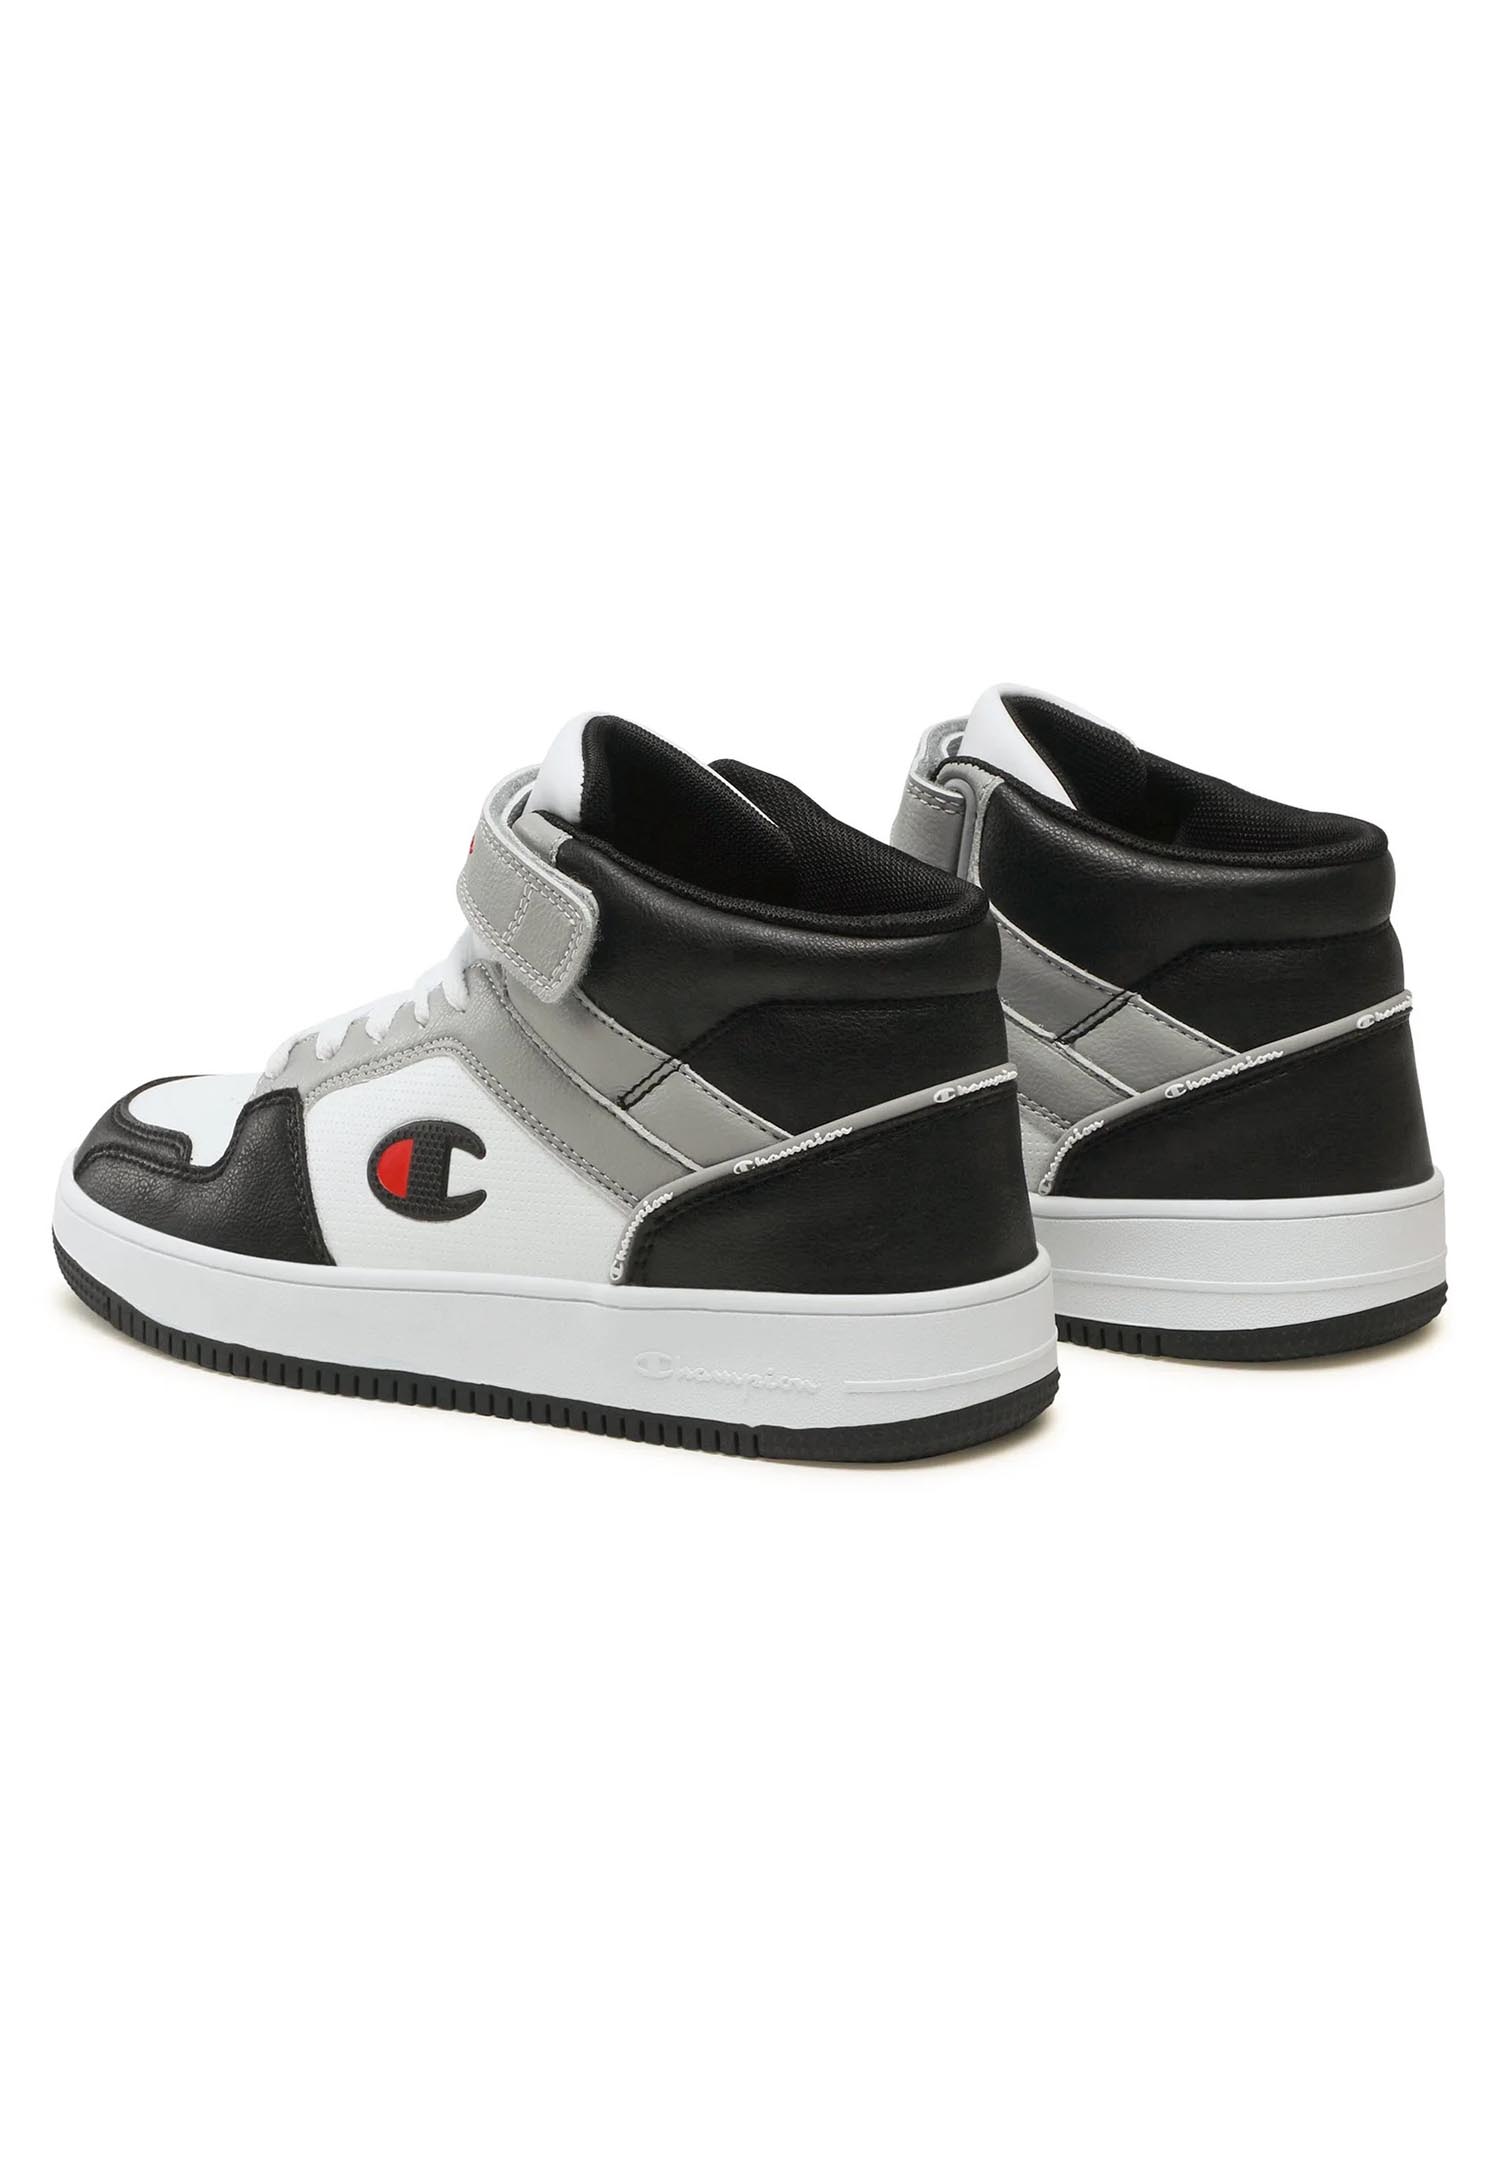 Champion REBOUND 2.0 MID Kinder Sneaker GS weiss/grau/ schwarz S32413-CHA-WW014 B